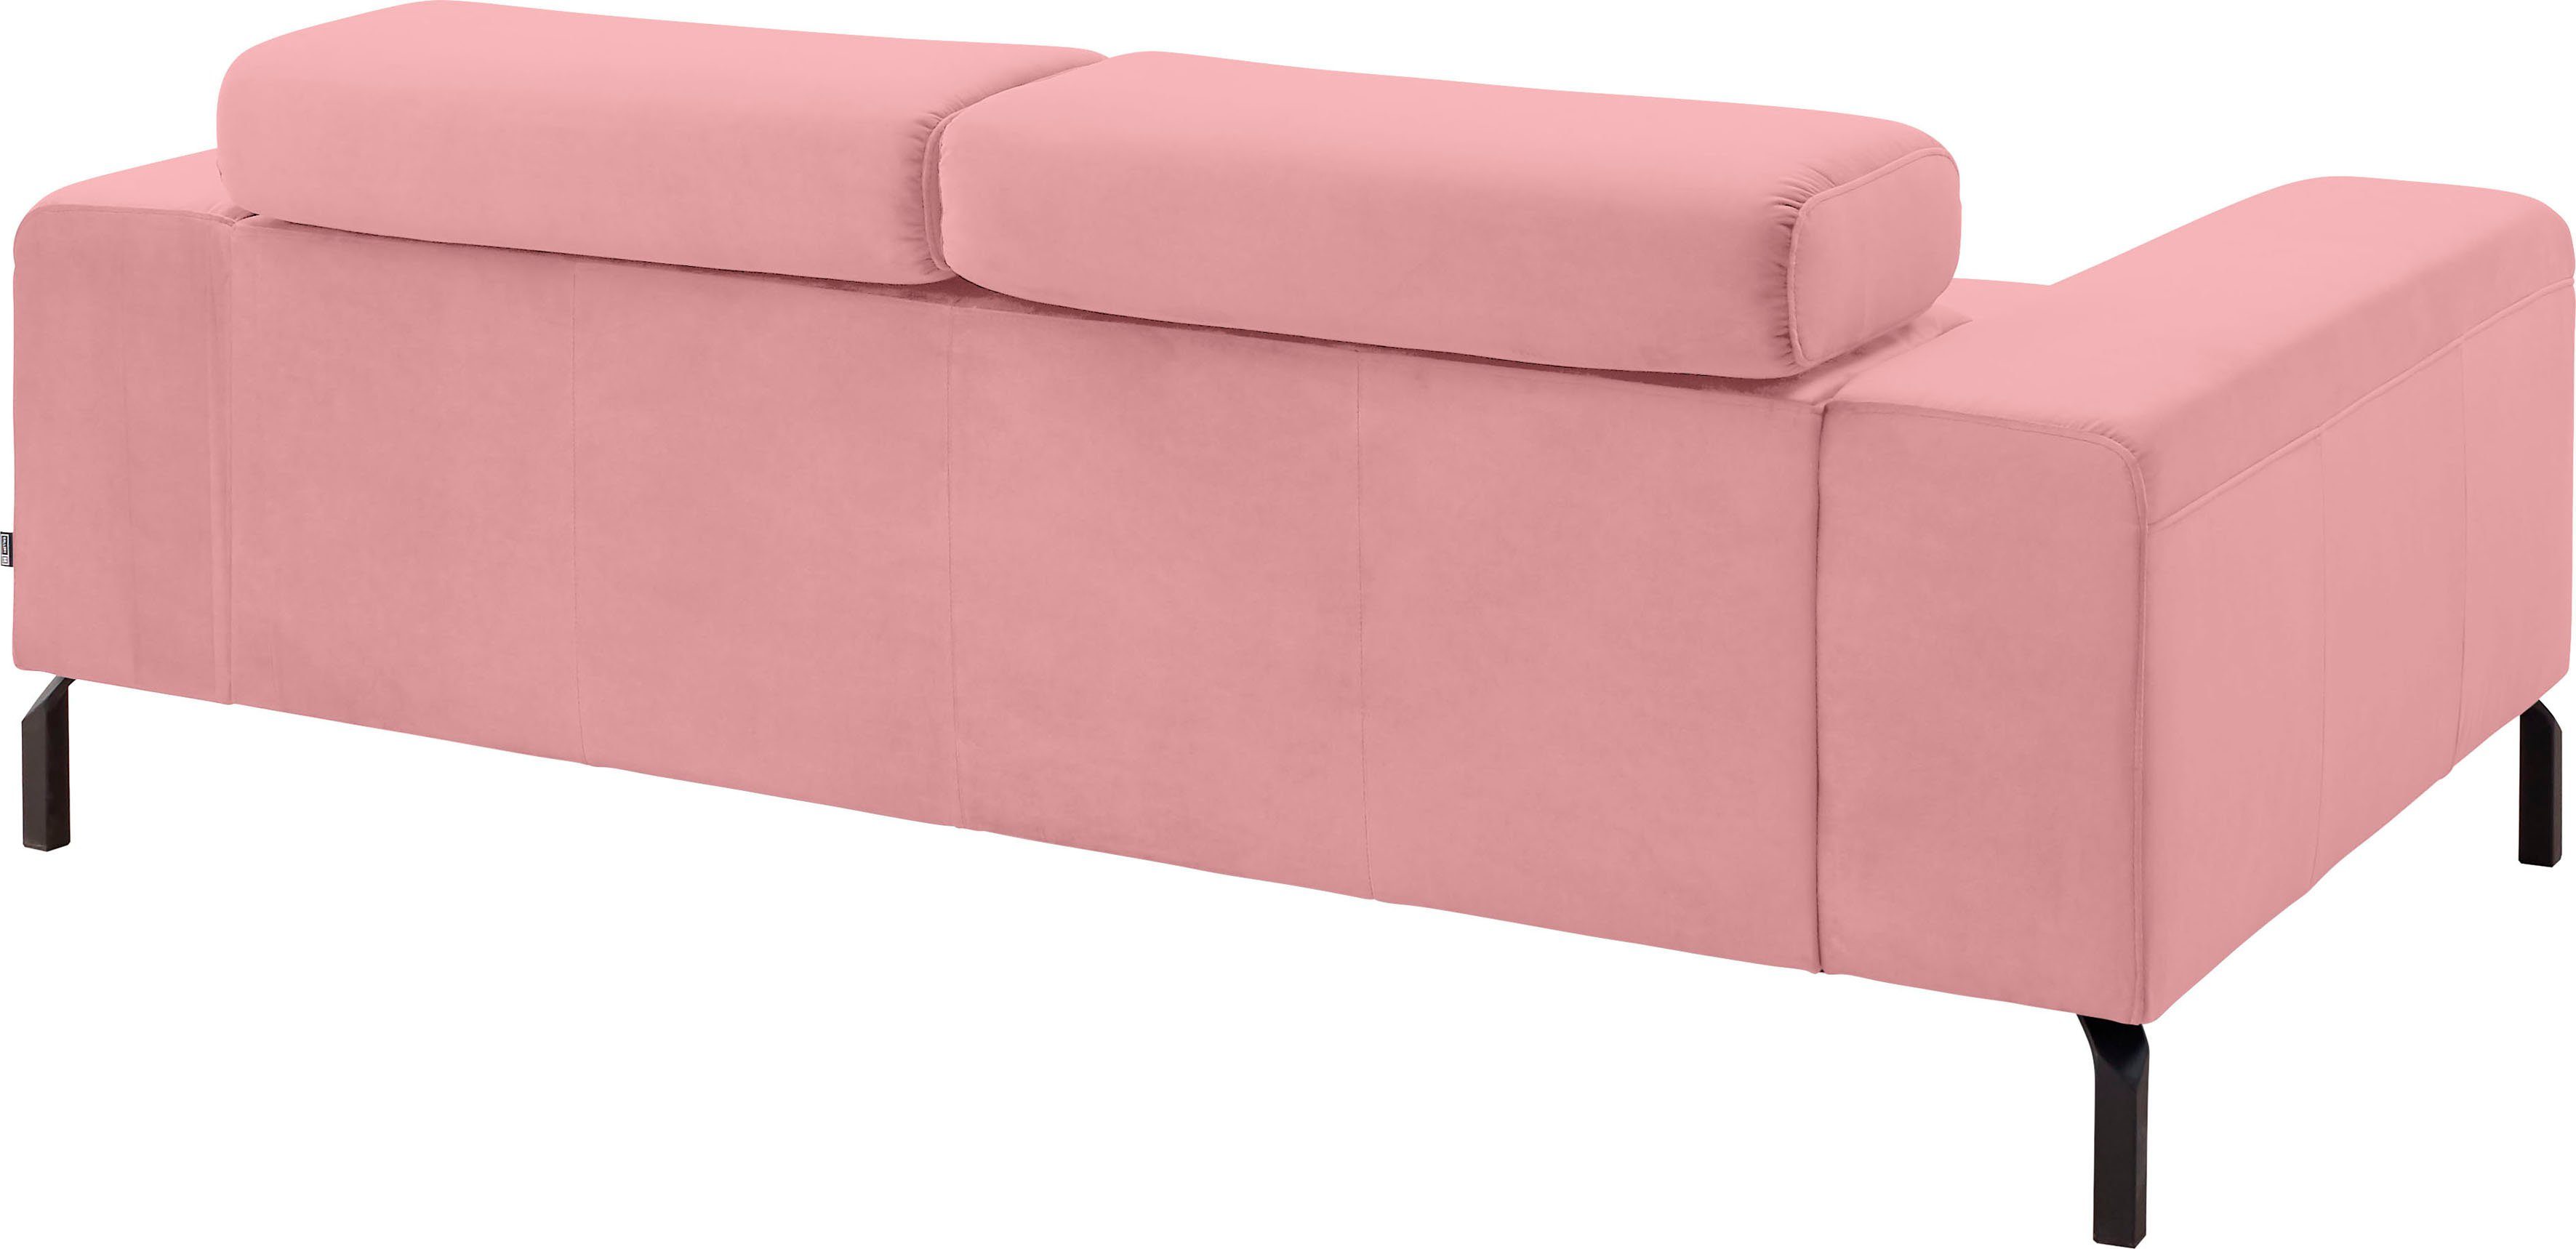 GALLERY M branded by Musterring 2-Sitzer Sitzvorzug, rosa Kopfteilverstellung Felicia Wahlweise Due, mit inklusive